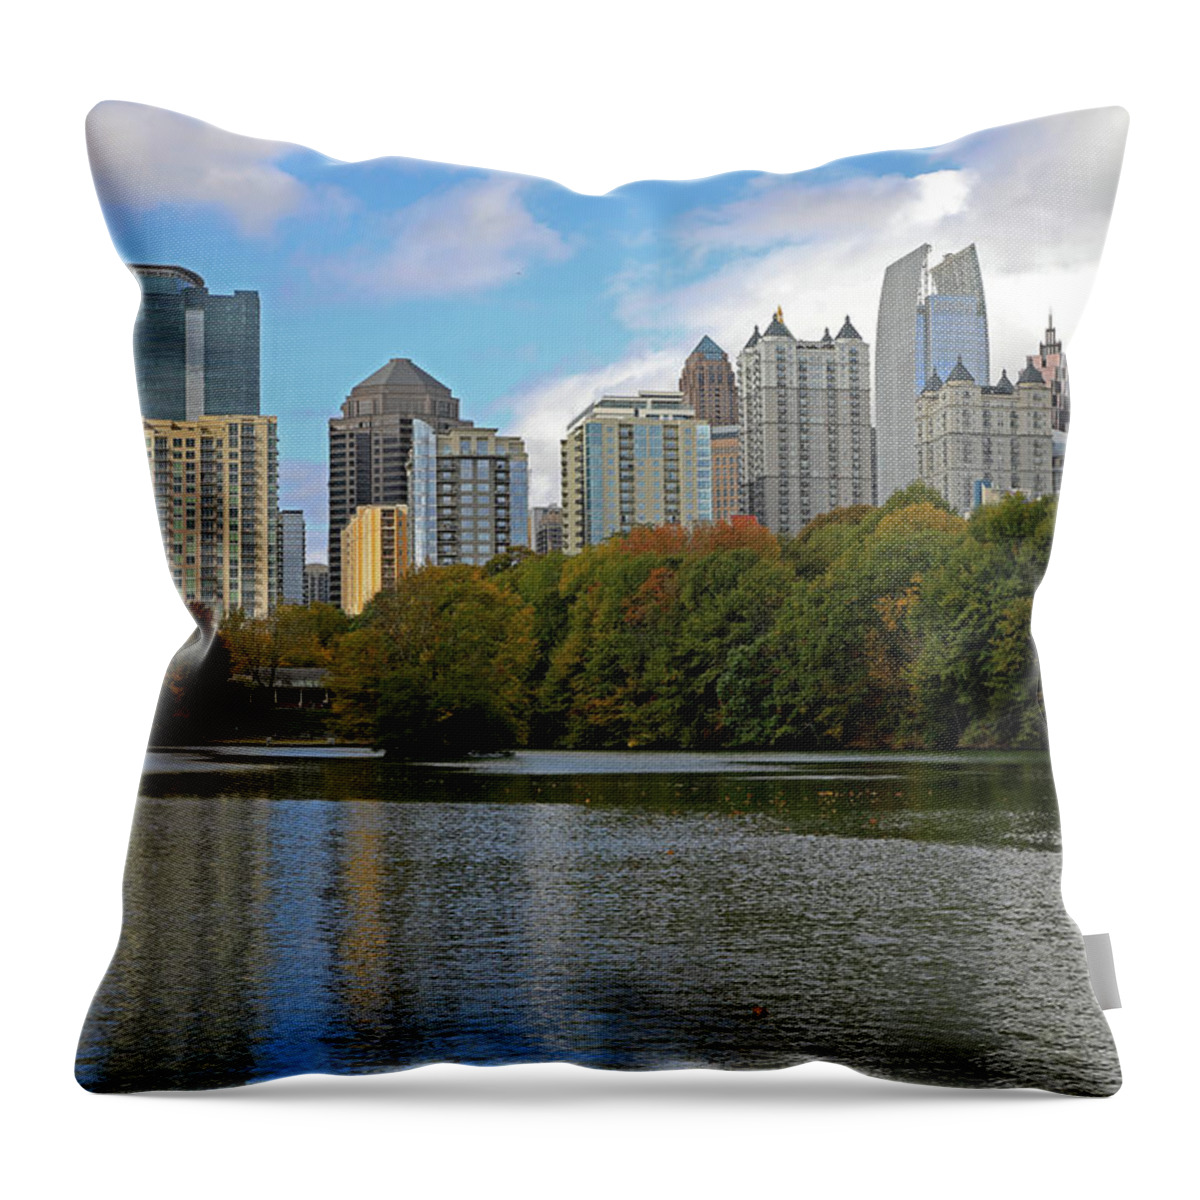 Atlanta Throw Pillow featuring the photograph Midtown Atlanta - Piedmont Park by Richard Krebs